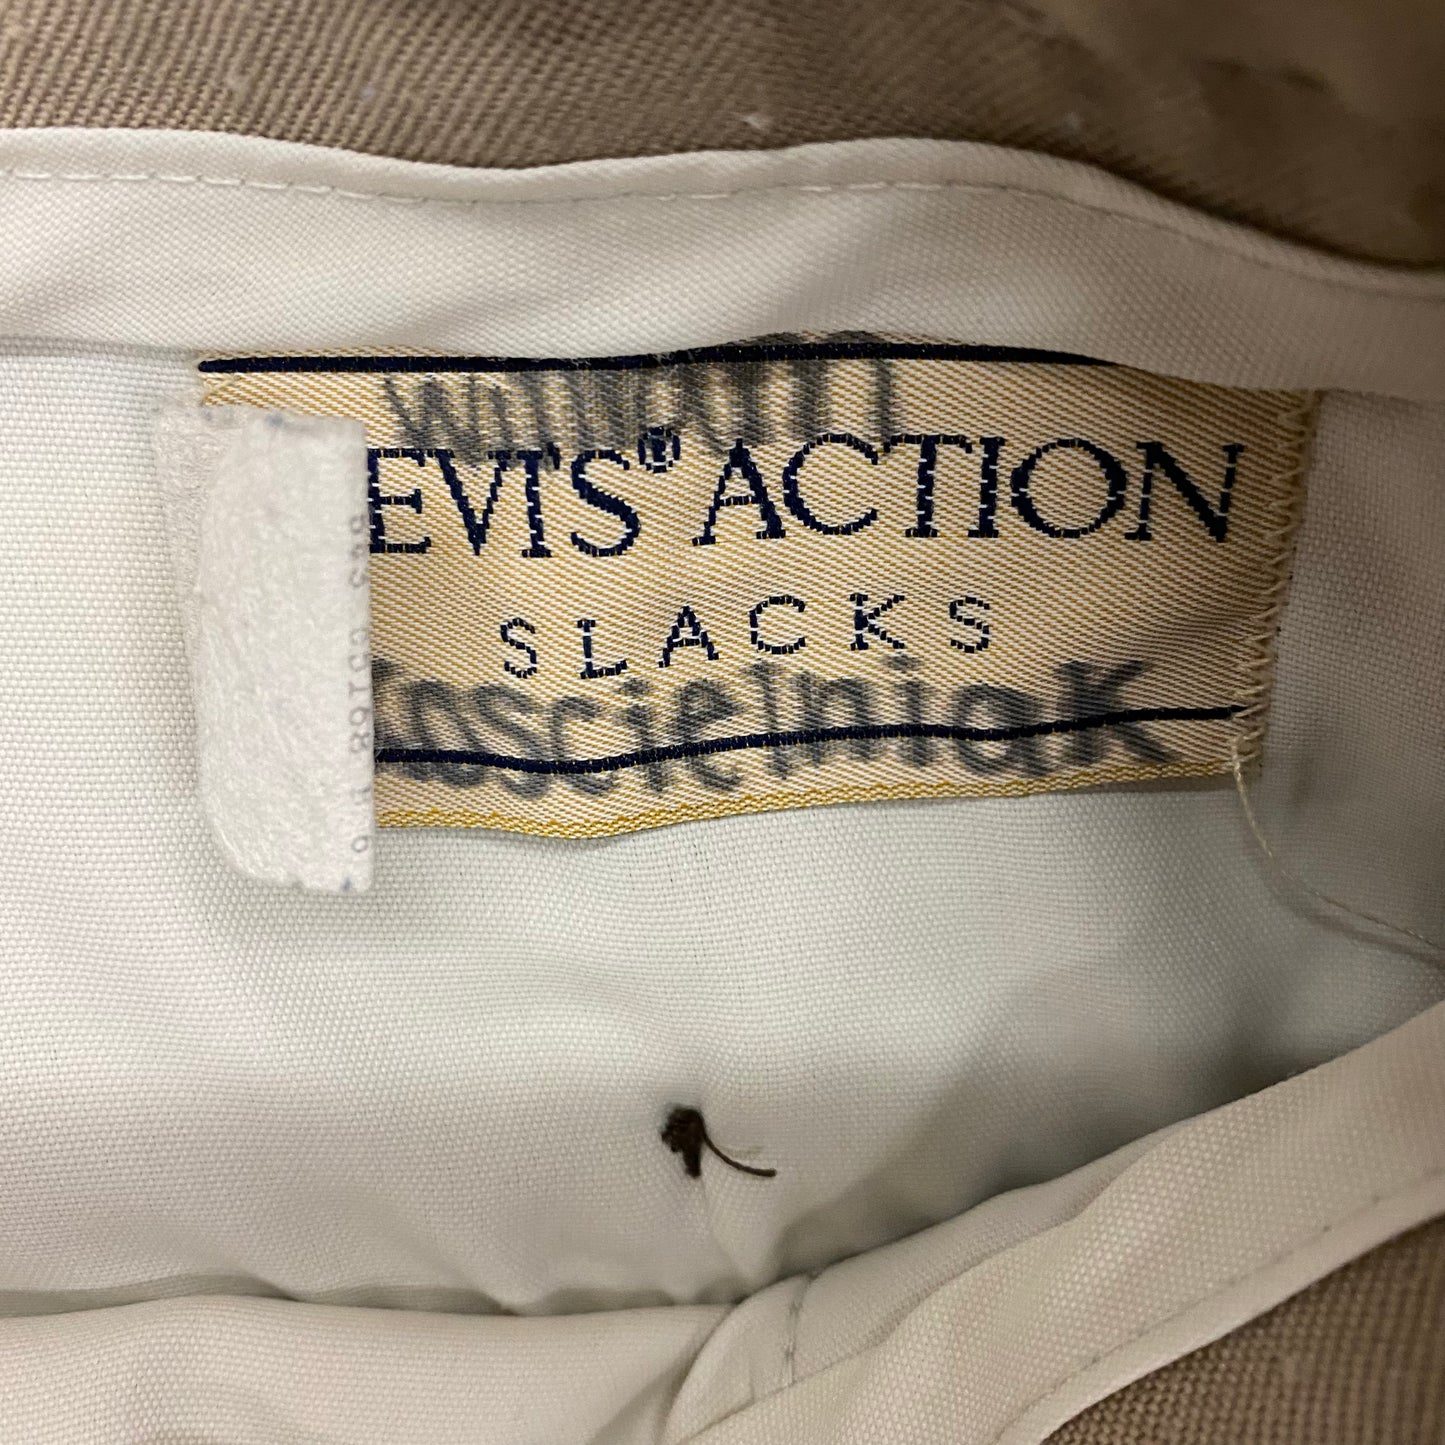 1980s Levi's Action Slacks Tan Dress Pants - 36"x29"